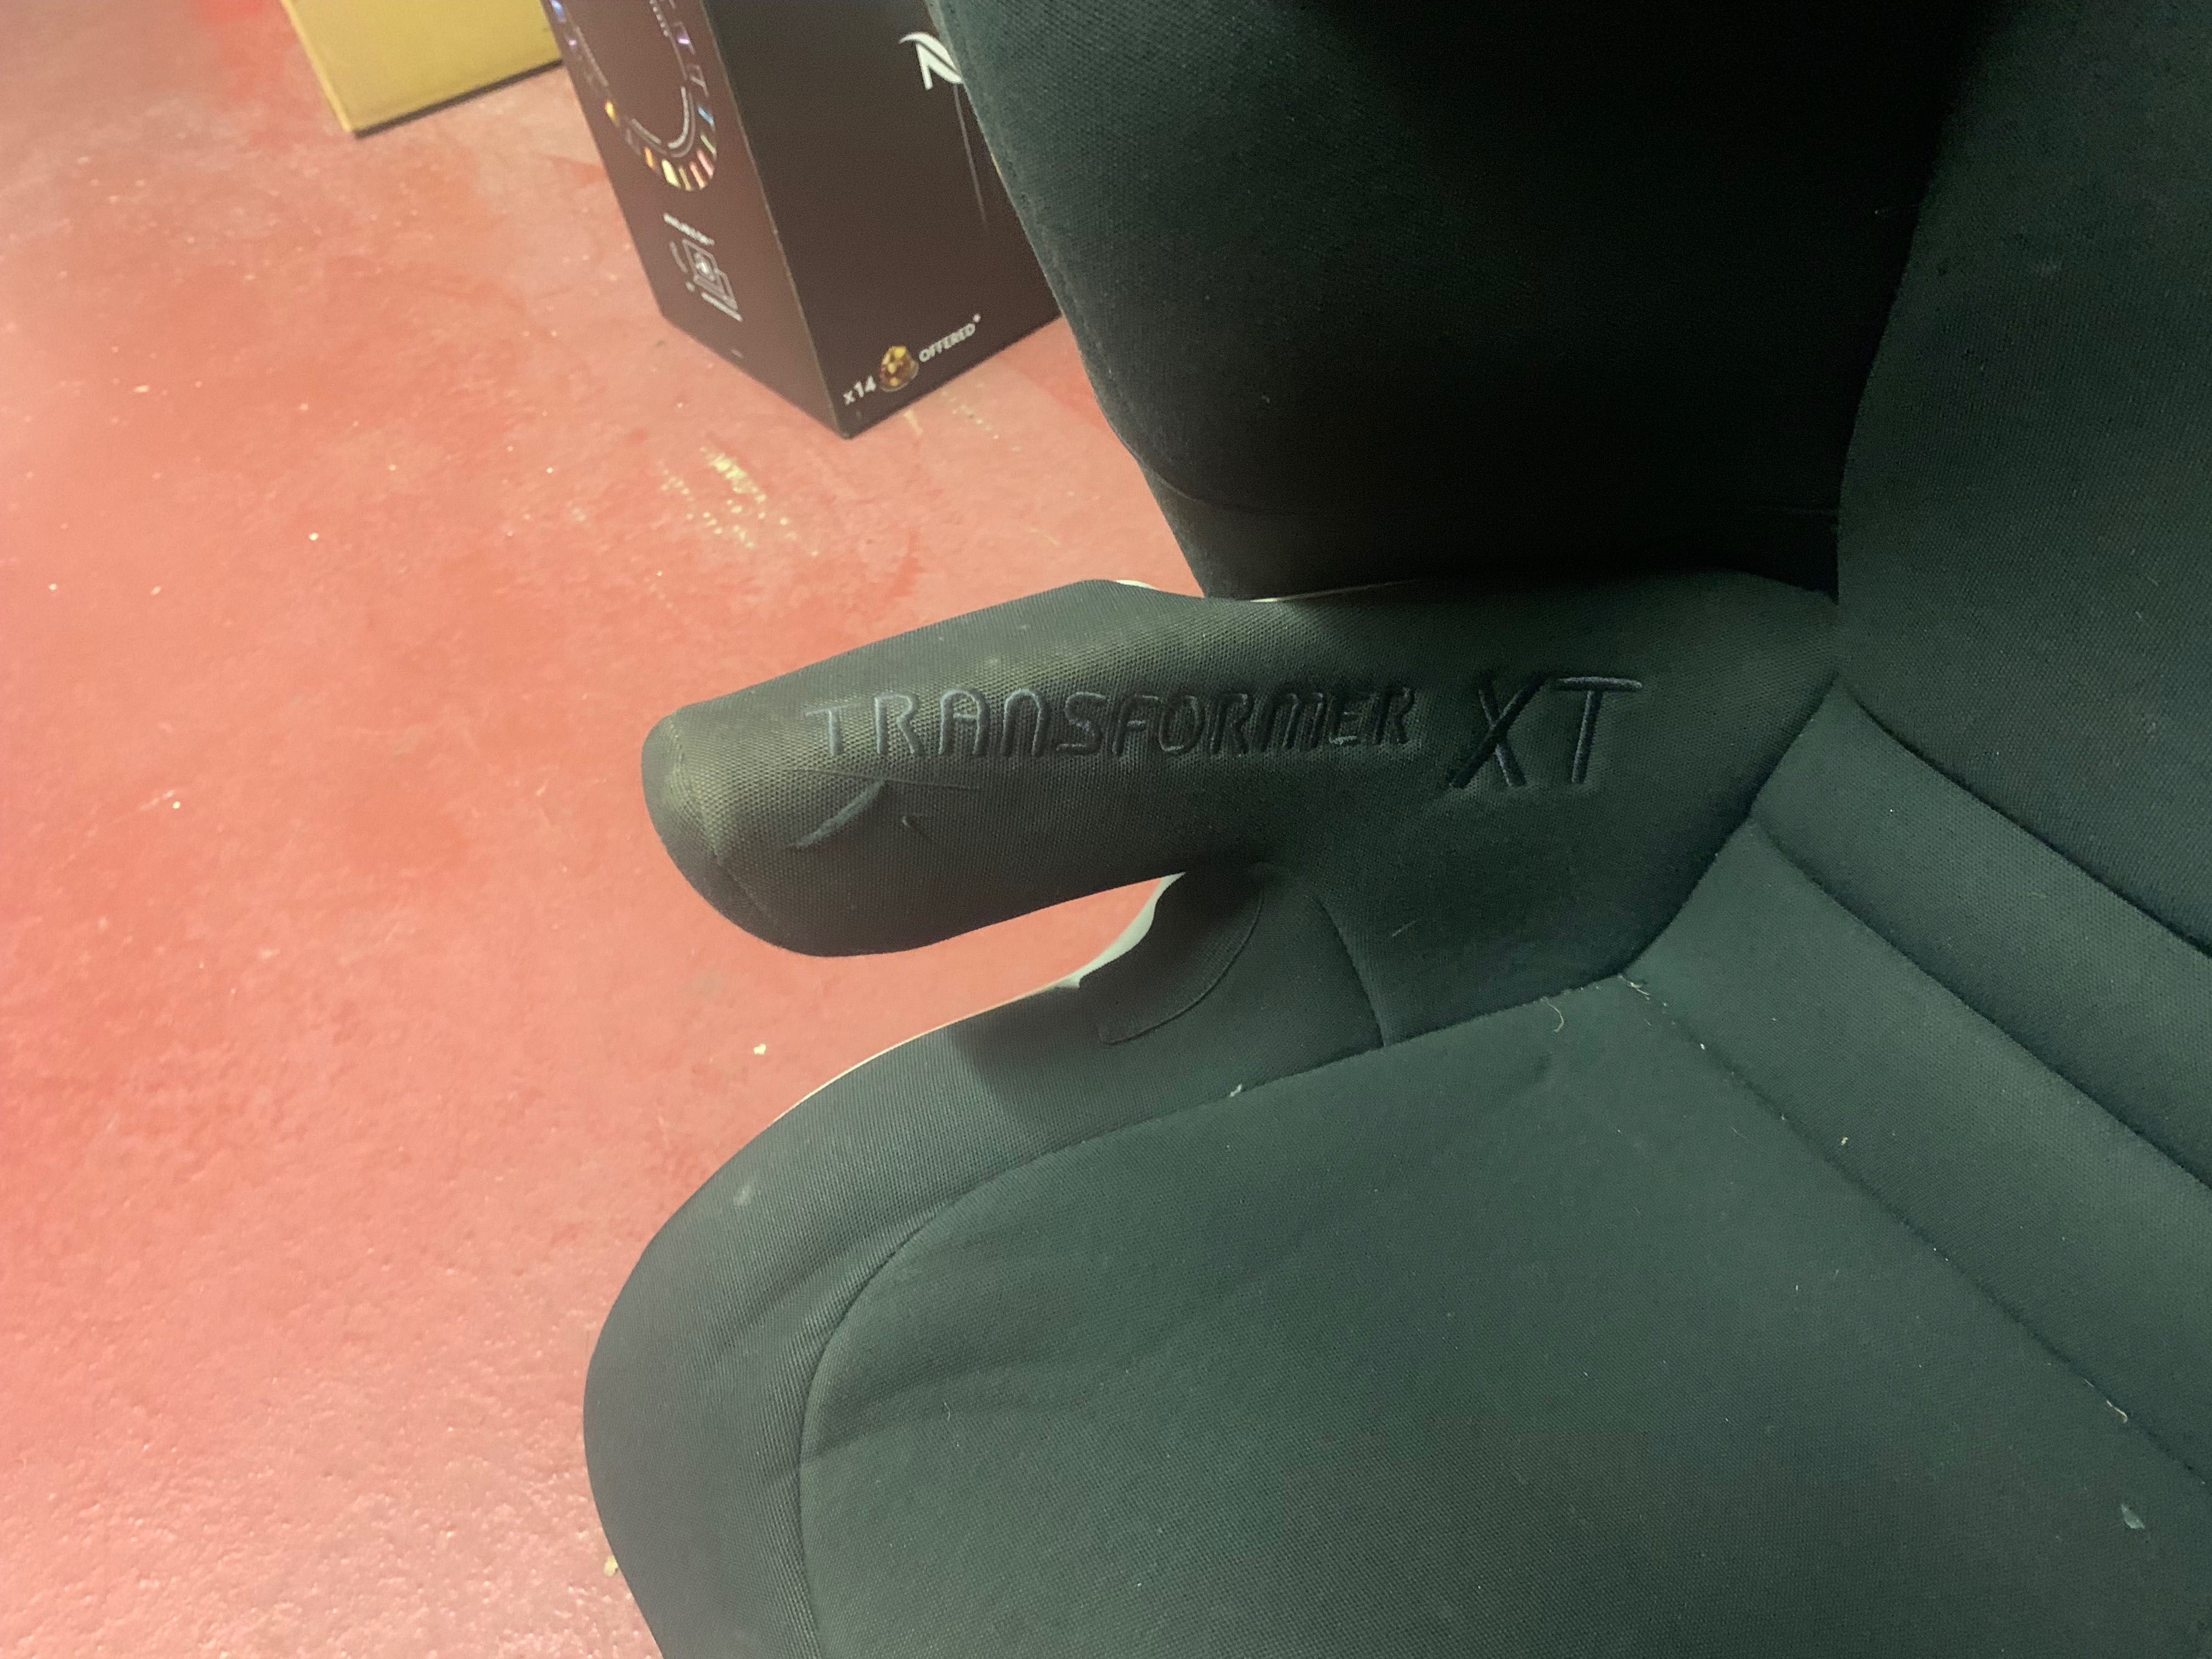 Concord Transformer XT cadeira auto